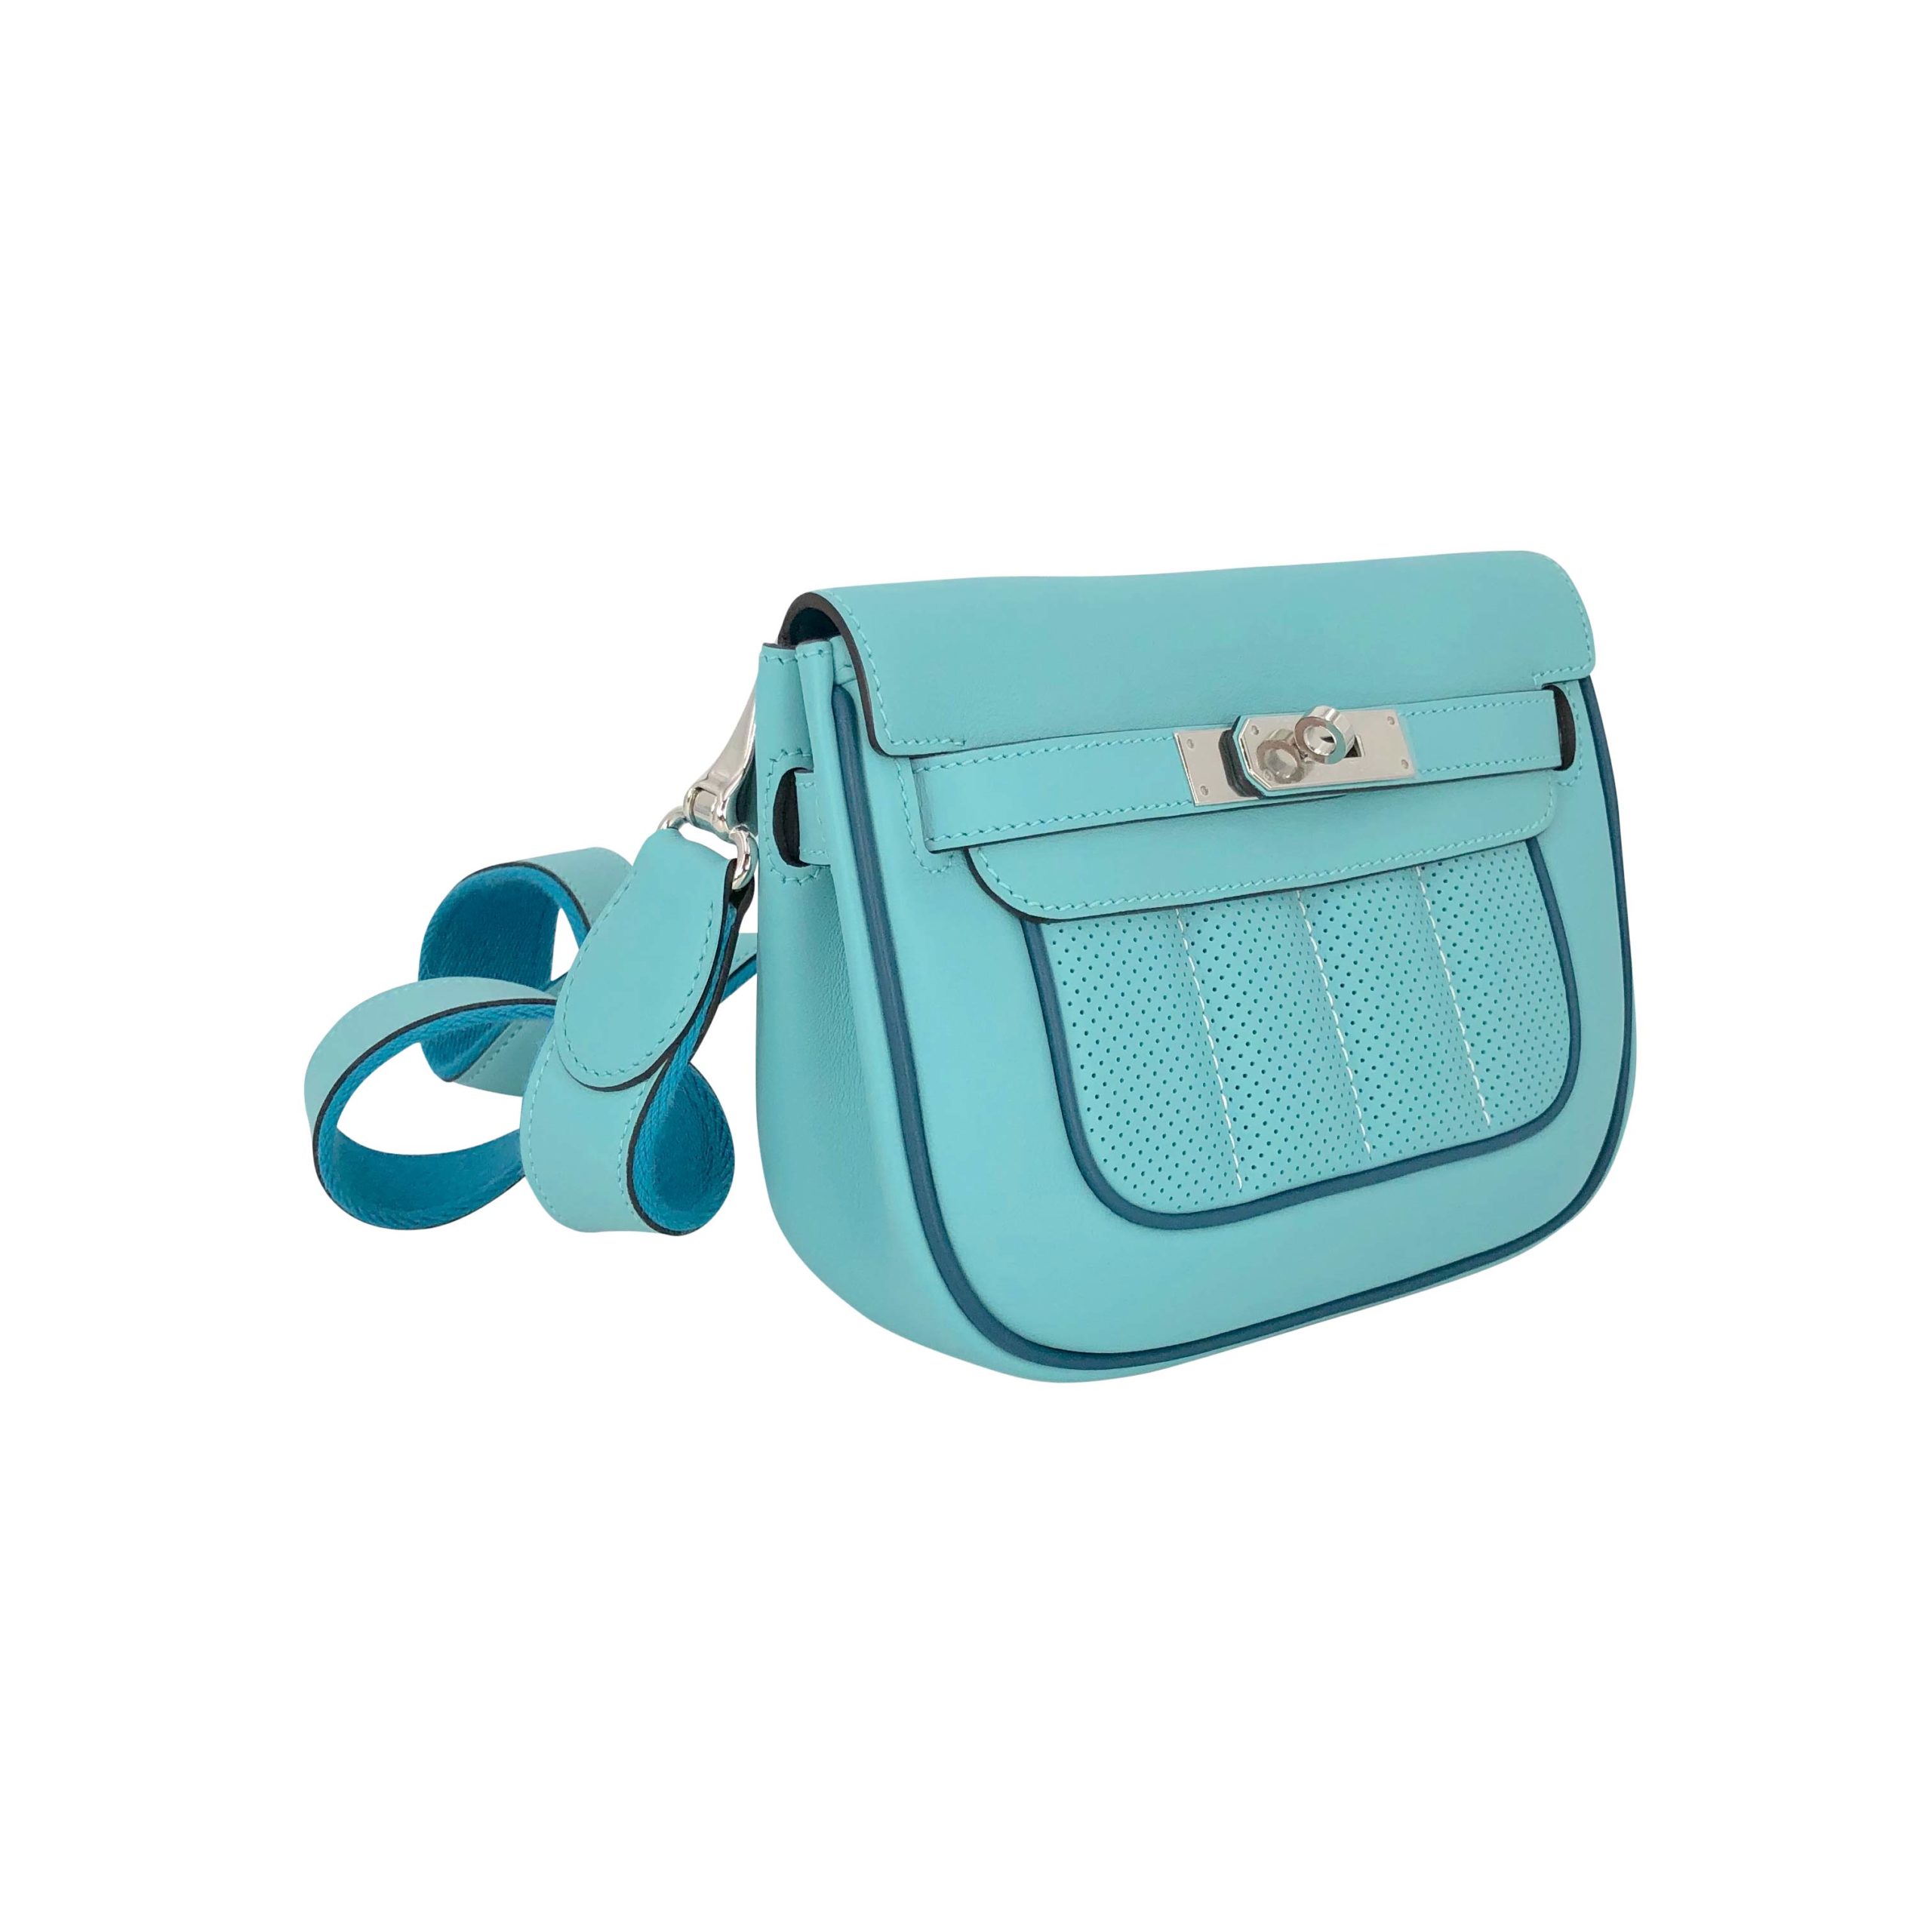 Hermès - Authenticated Berline Handbag - Leather Blue Plain for Women, Very Good Condition